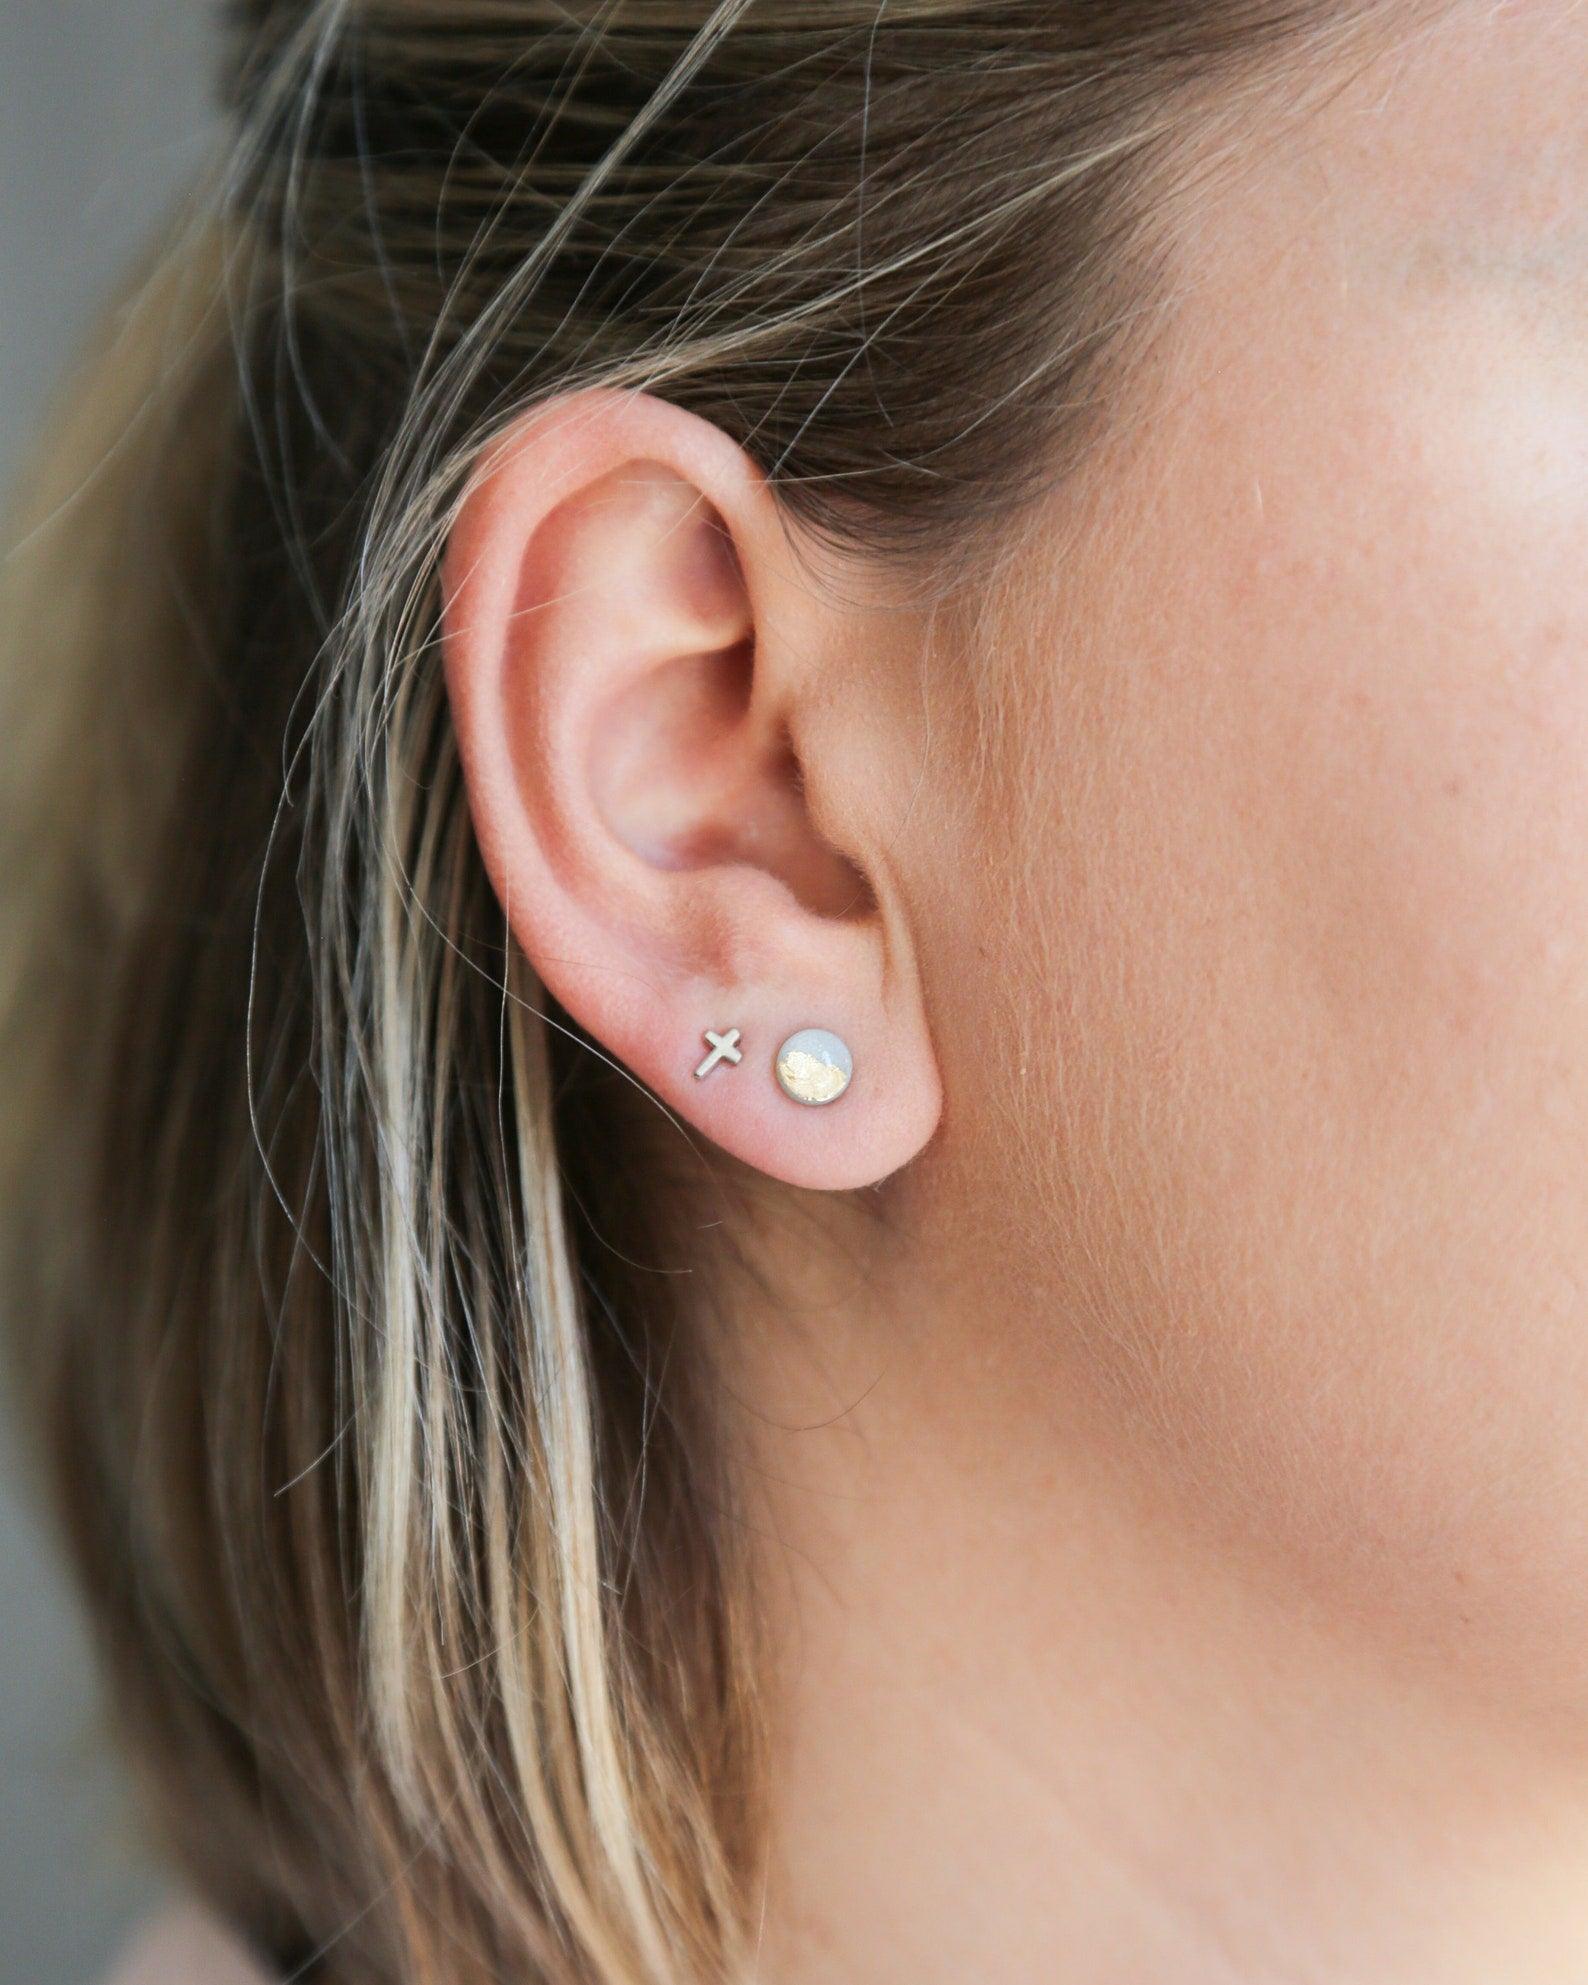 Delicate surgical steel earrings, Hypoallergenic studs for sensitive ears